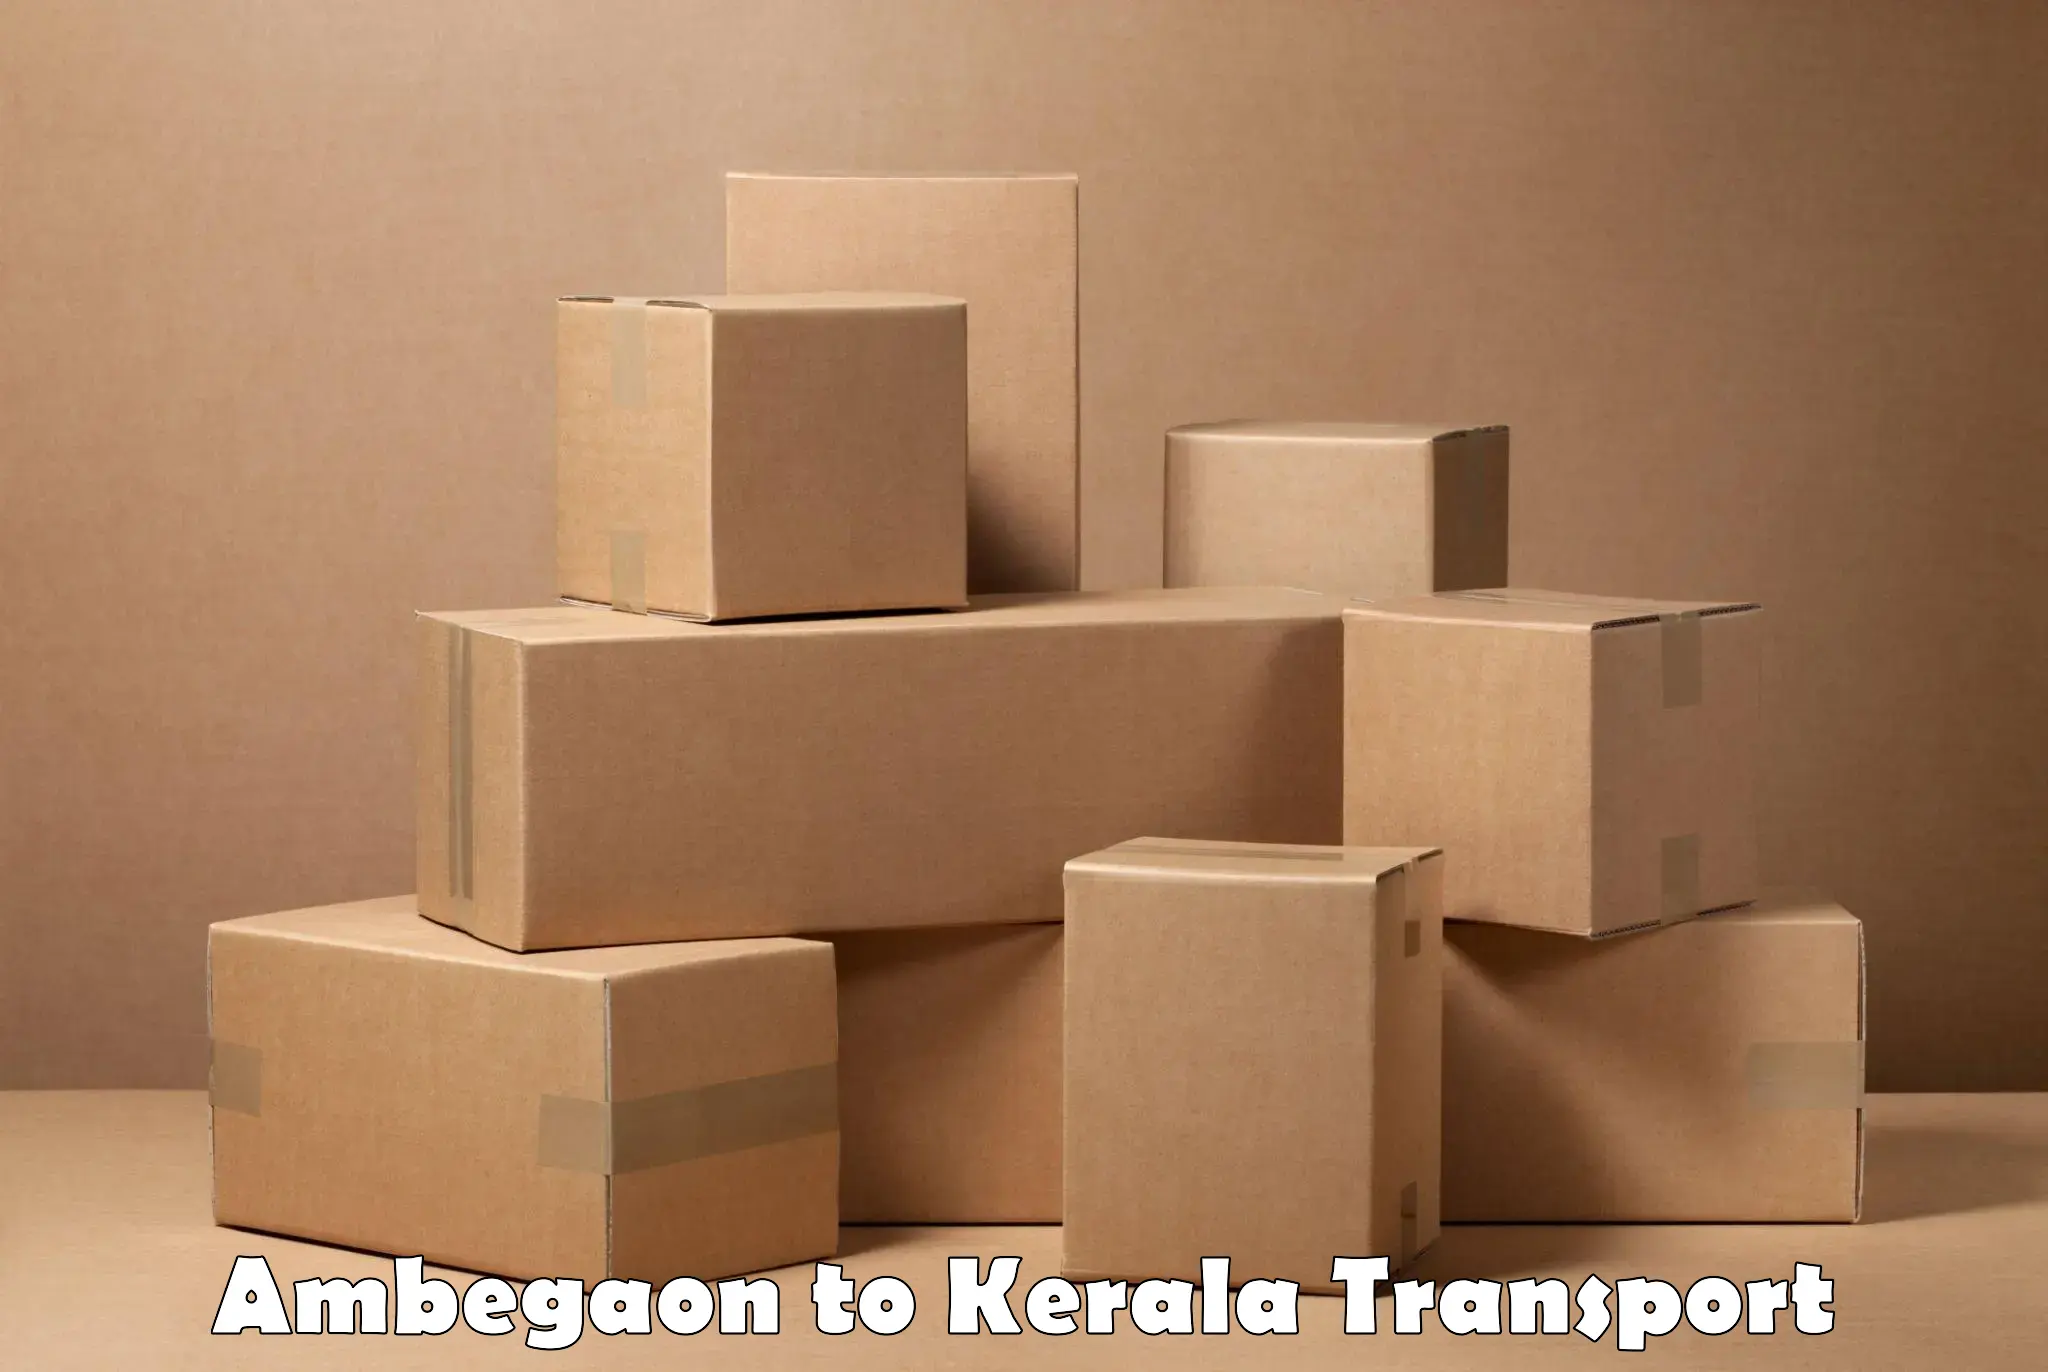 Online transport service Ambegaon to Trivandrum